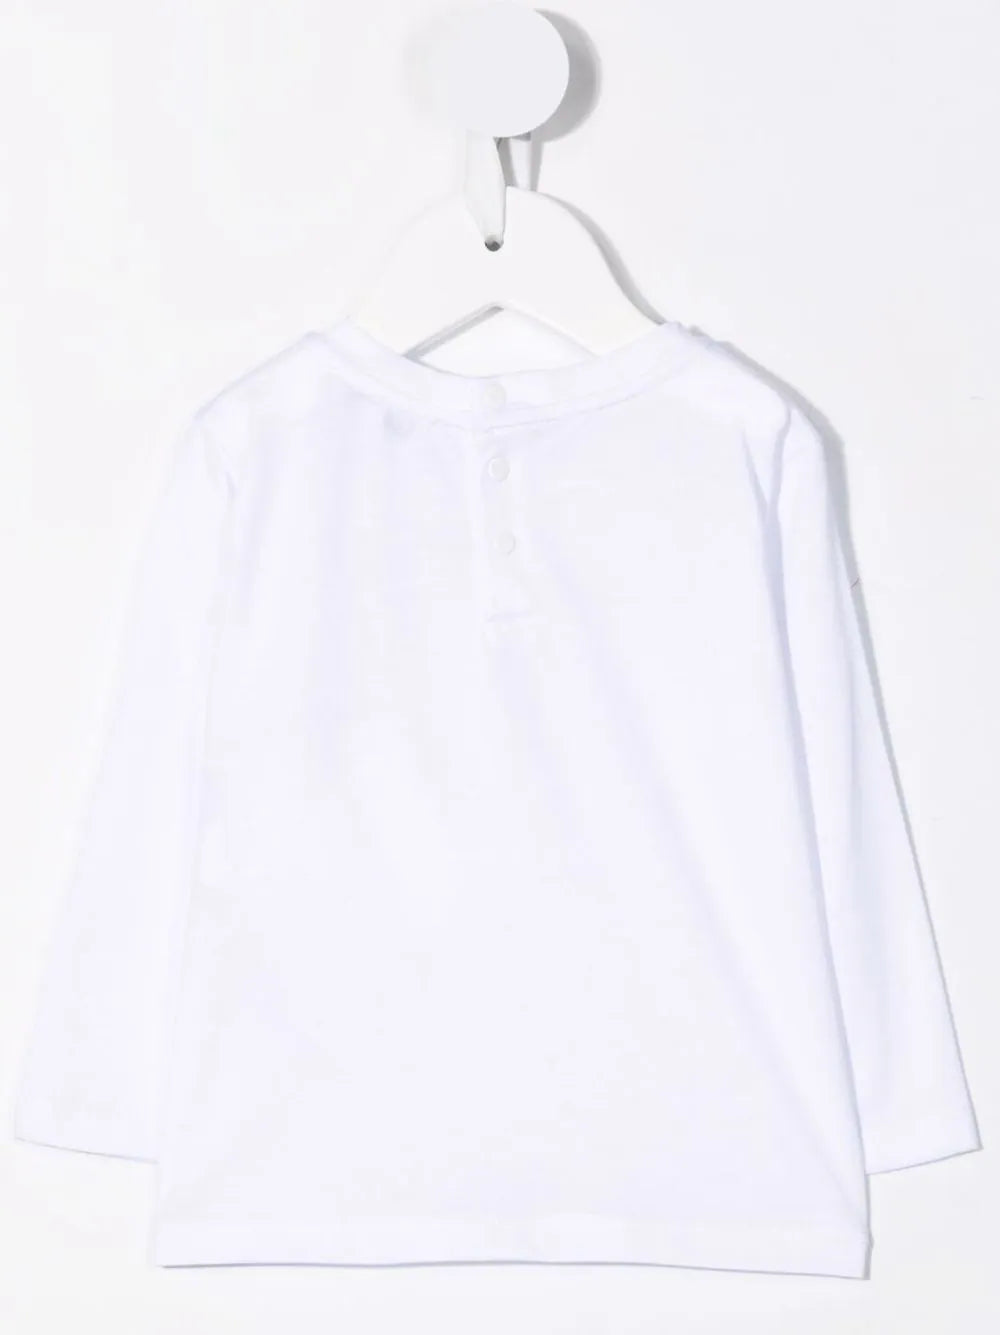 Emporio Armani T-Shirt Style: 8Nhtn6